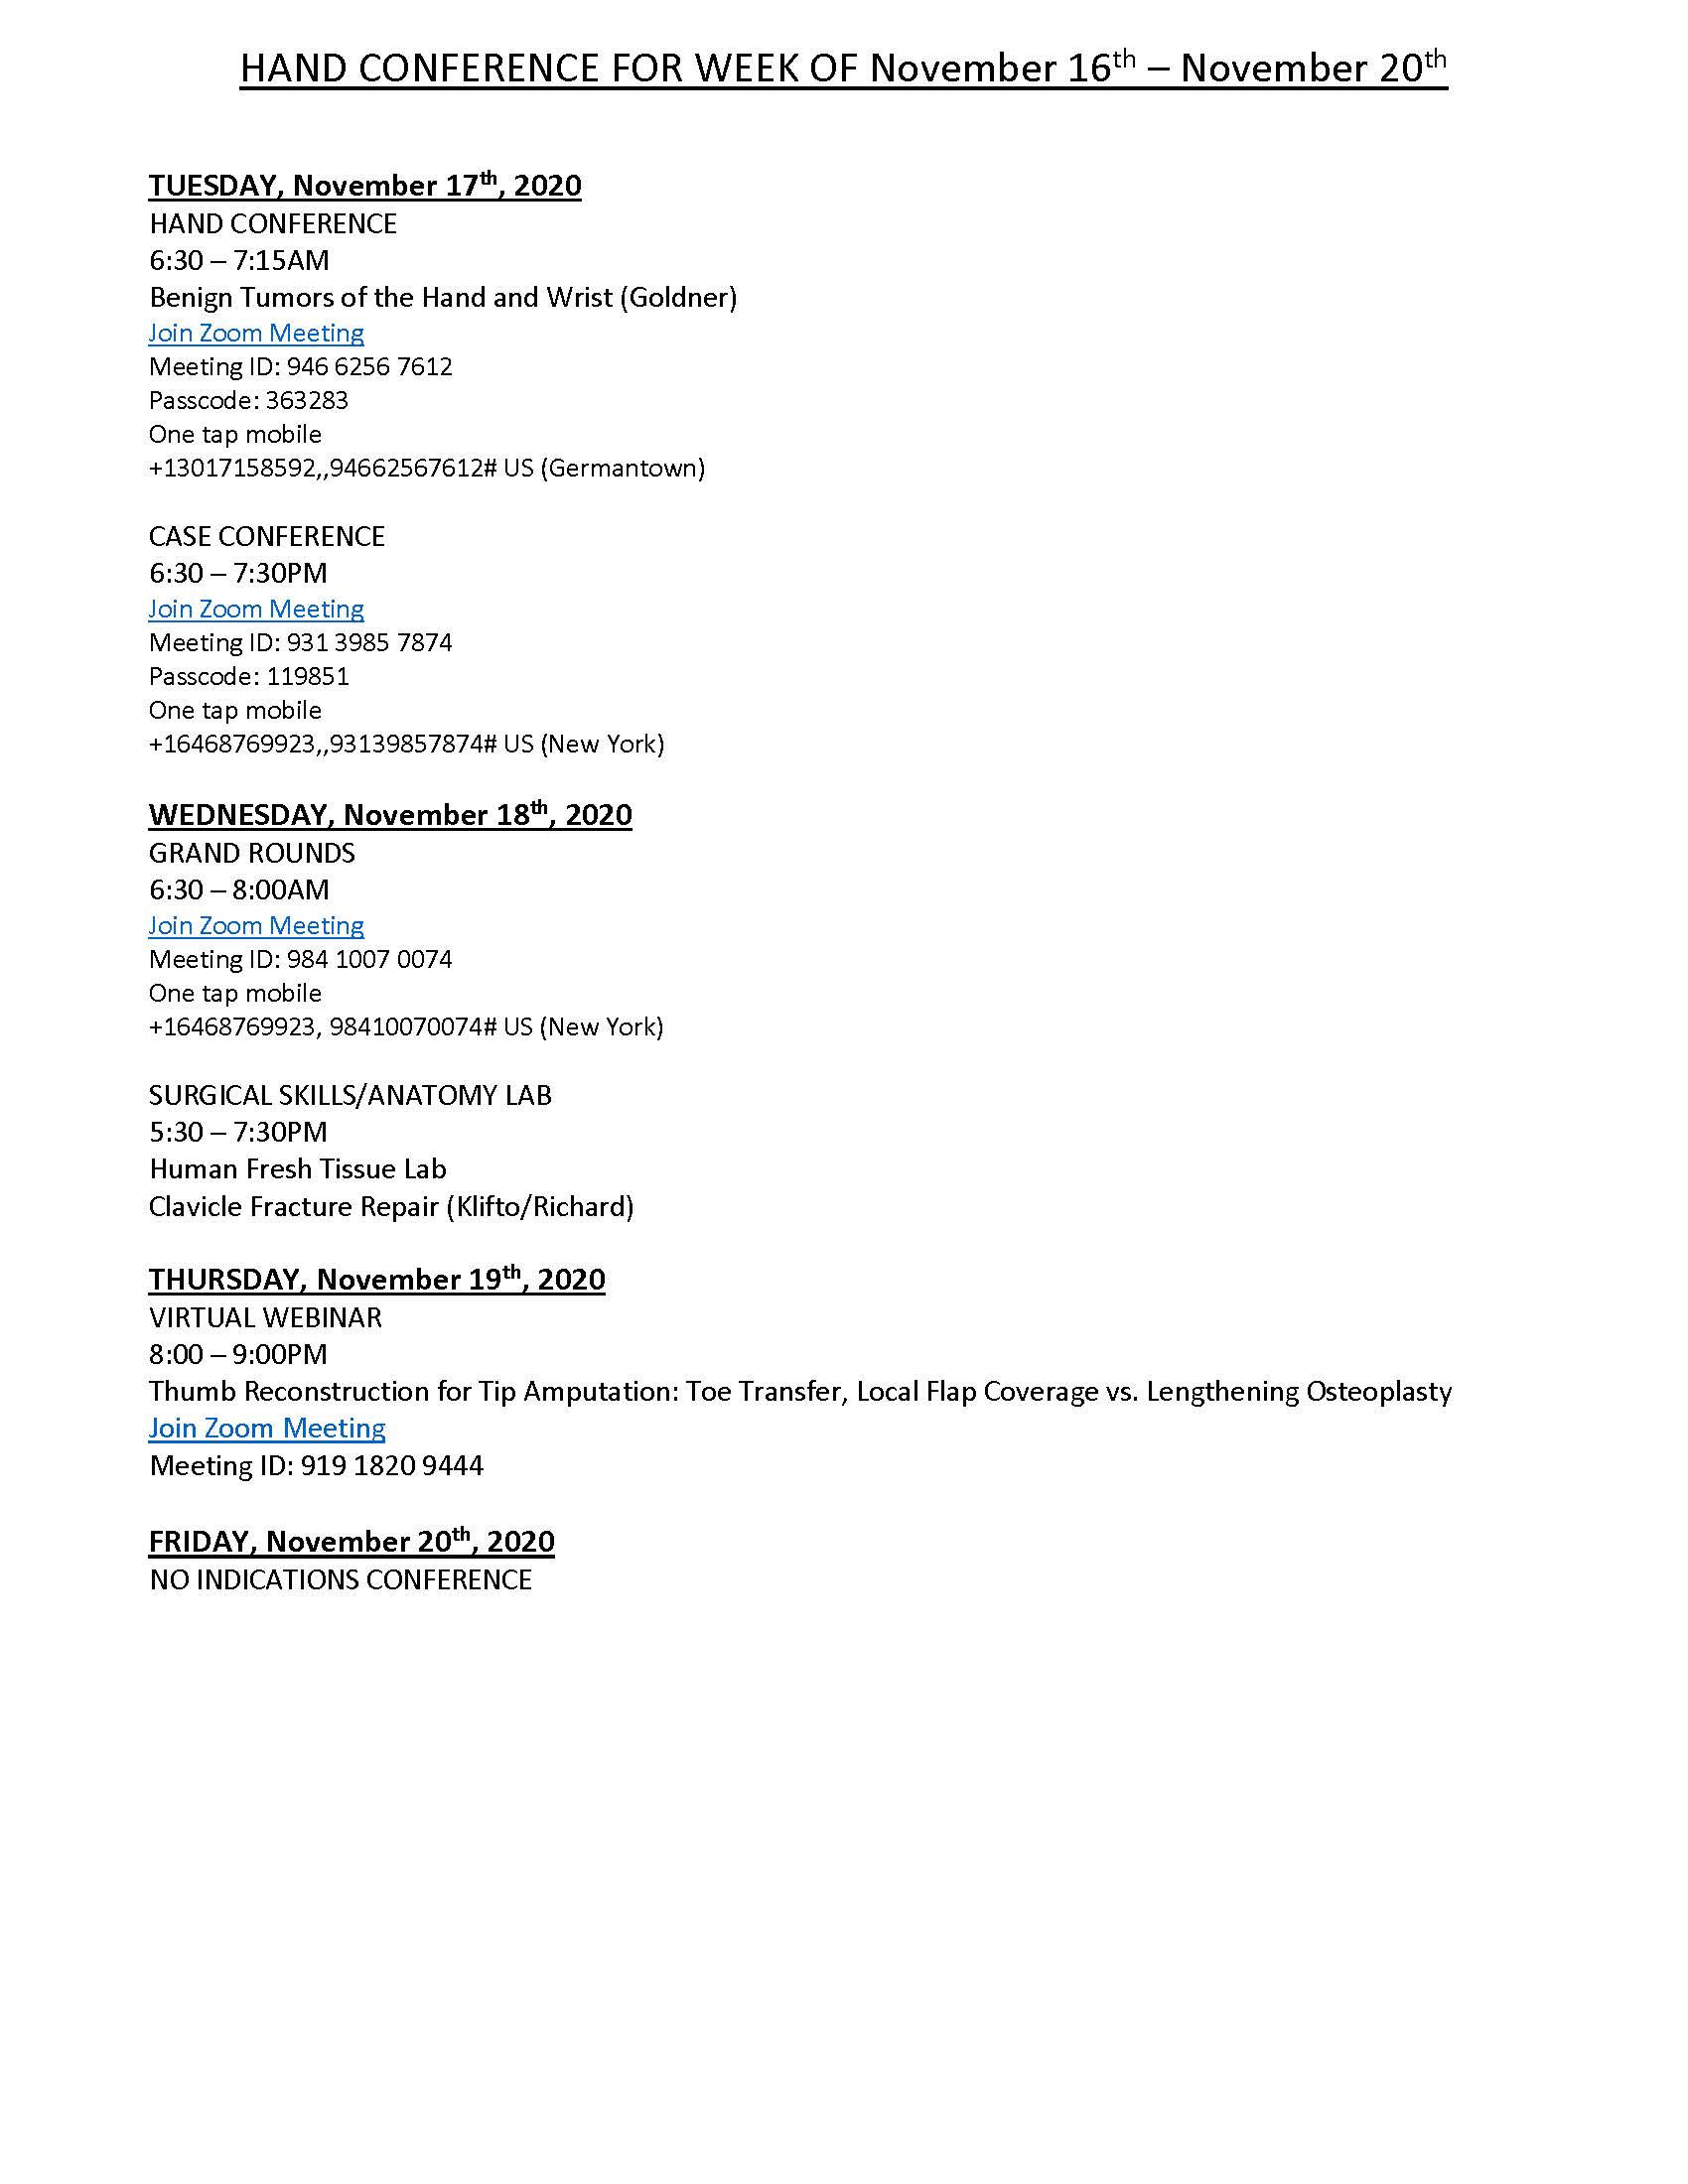 Weekly Hand Conference Schedule Duke Orthopaedics News & Updates